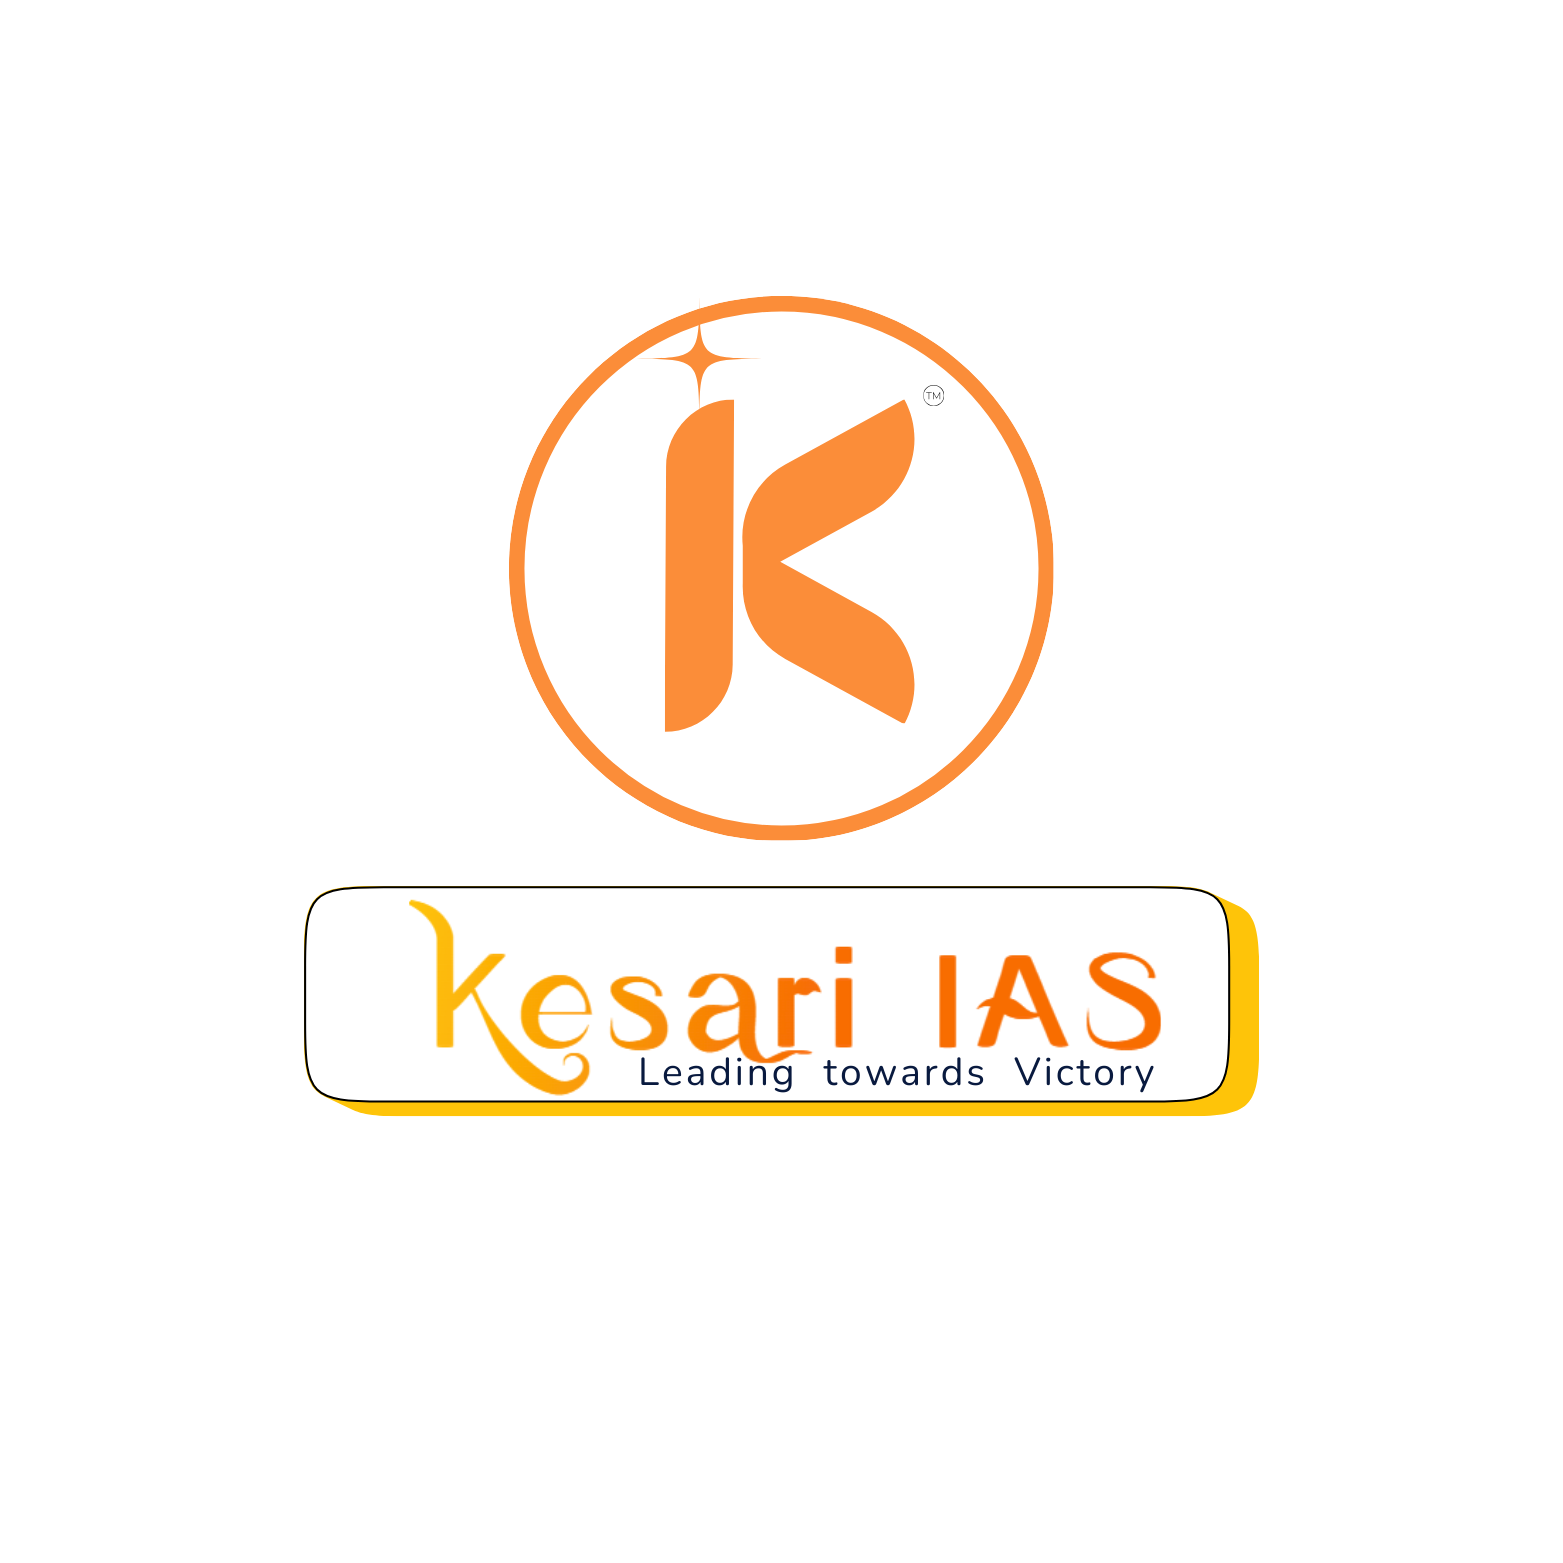 kesari ias logo for social media